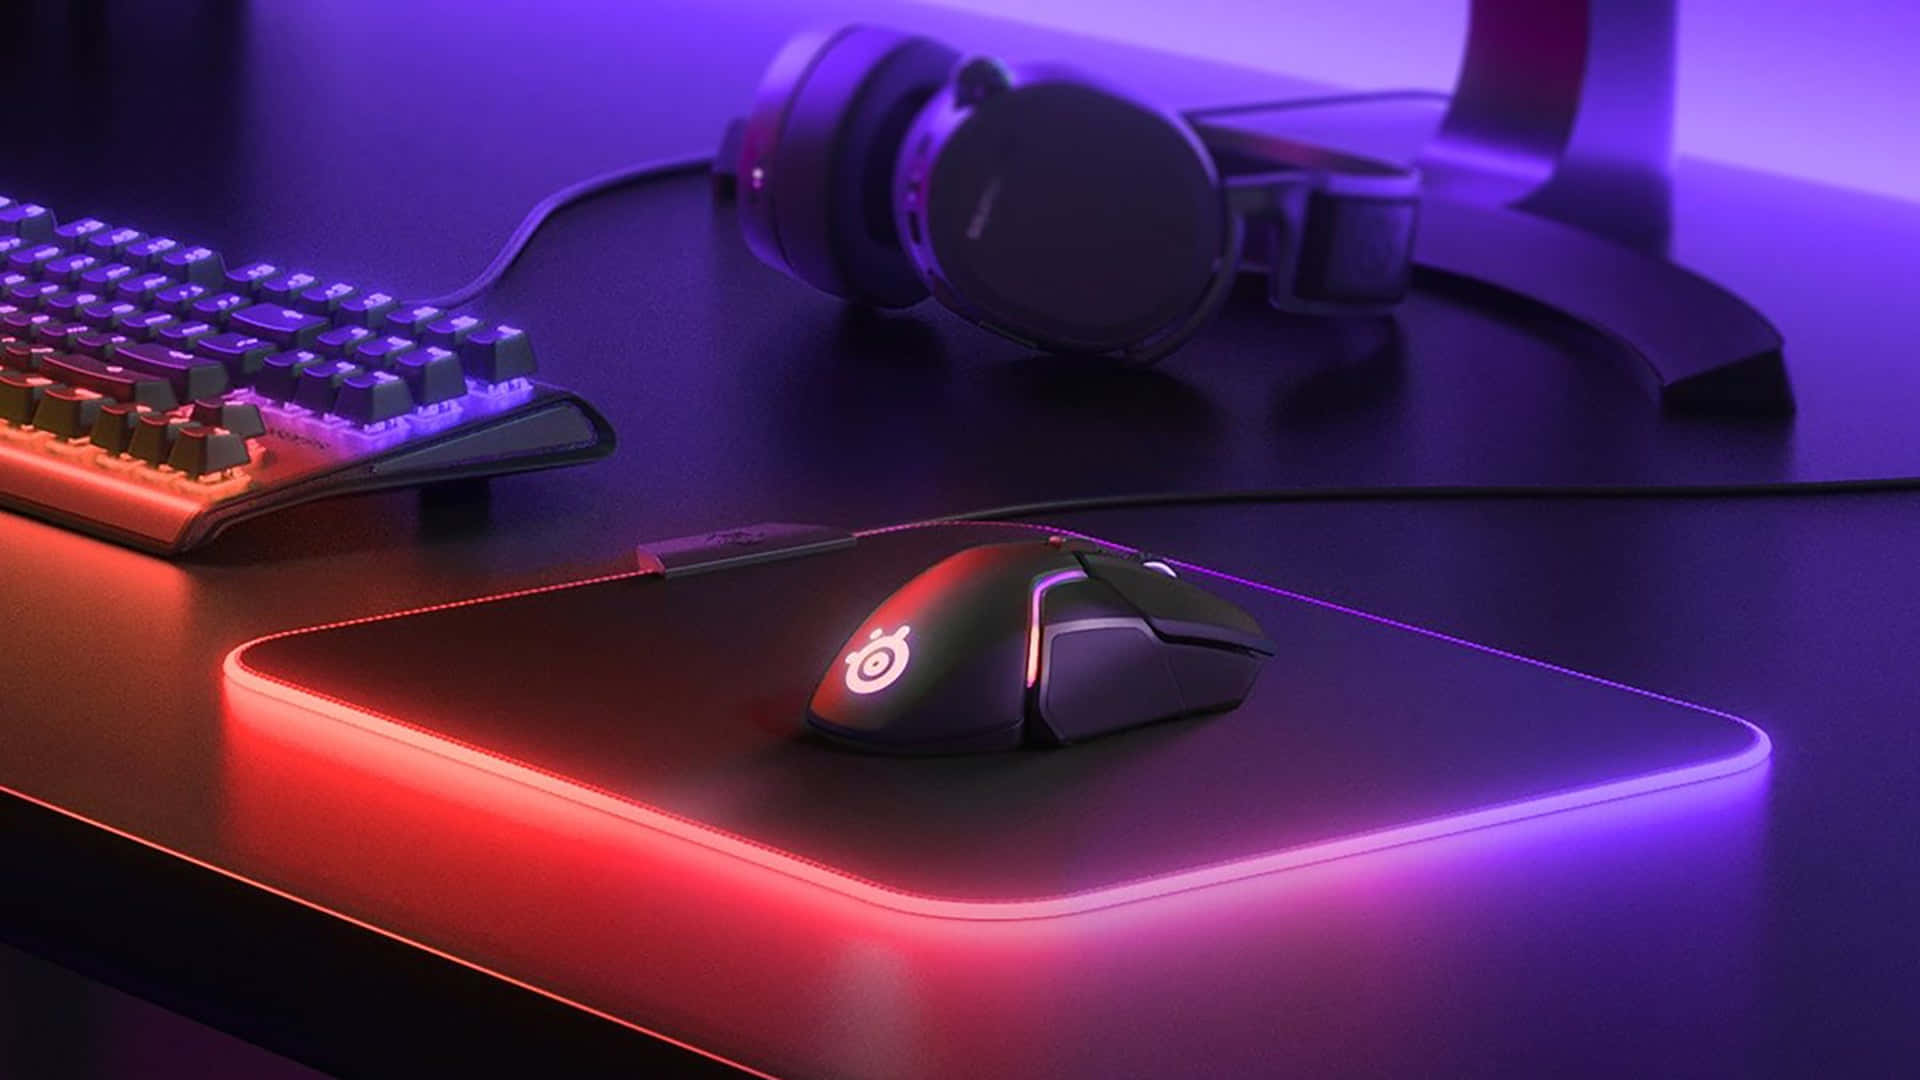 Sleek and Modern Gaming Mouse Wallpaper